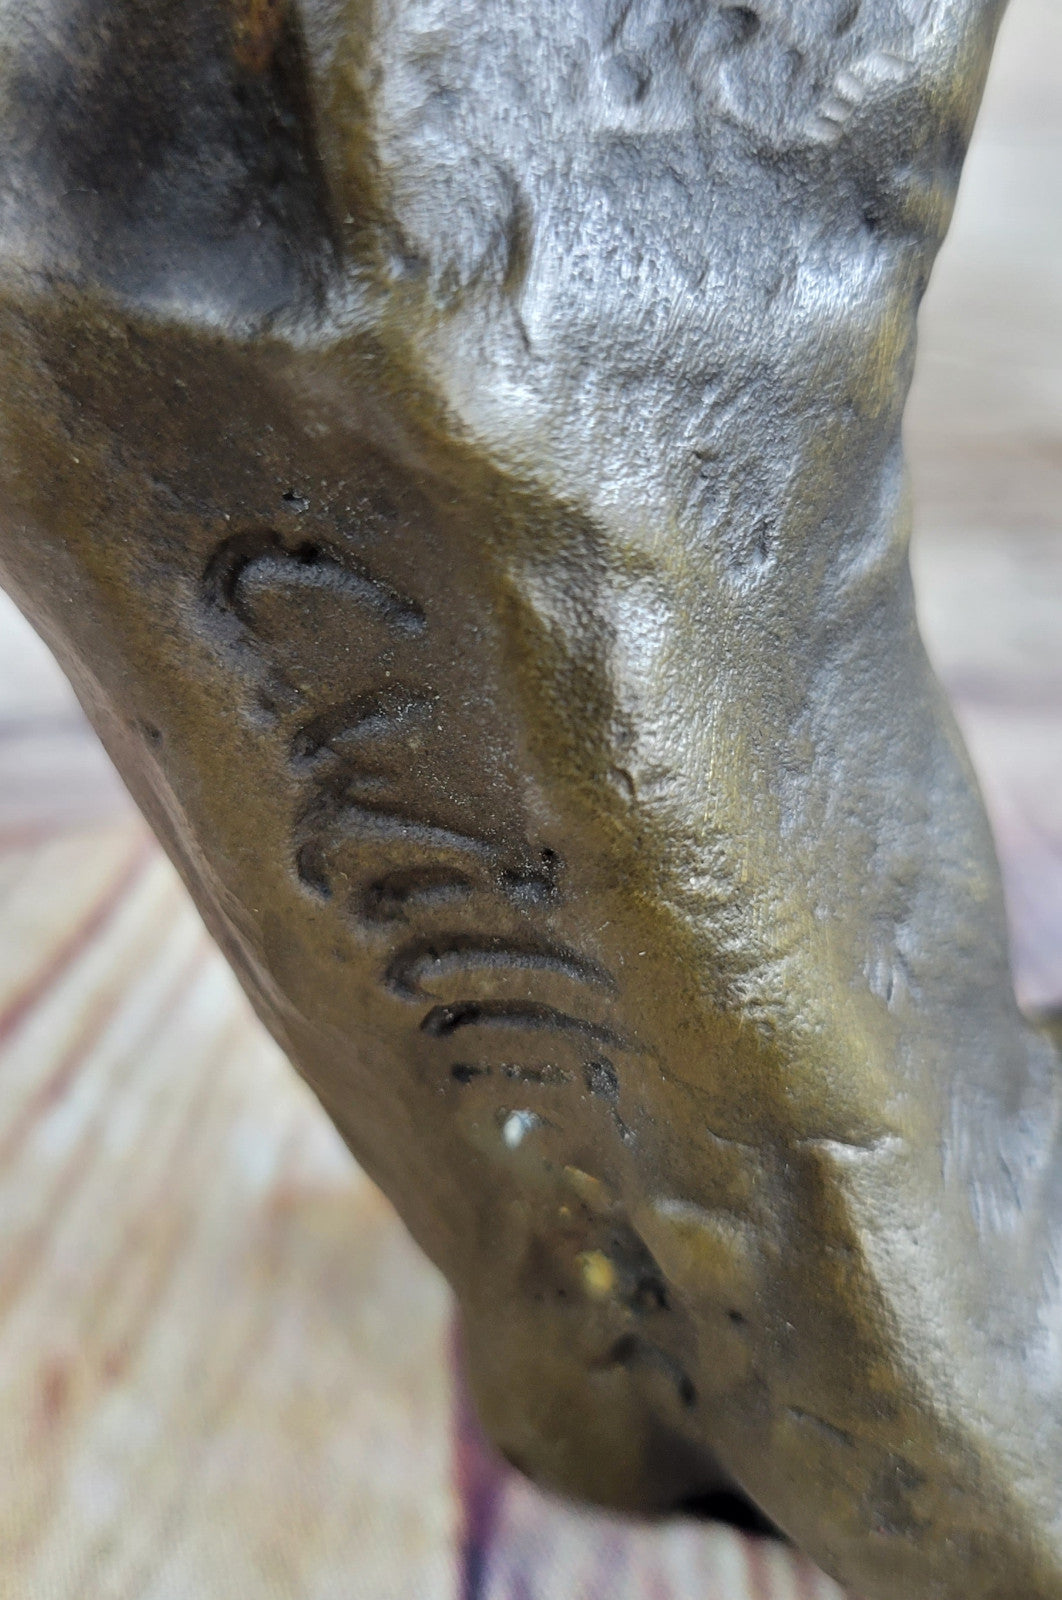 Handcrafted bronze sculpture SALE Bulldog English Large Extra Original Signed